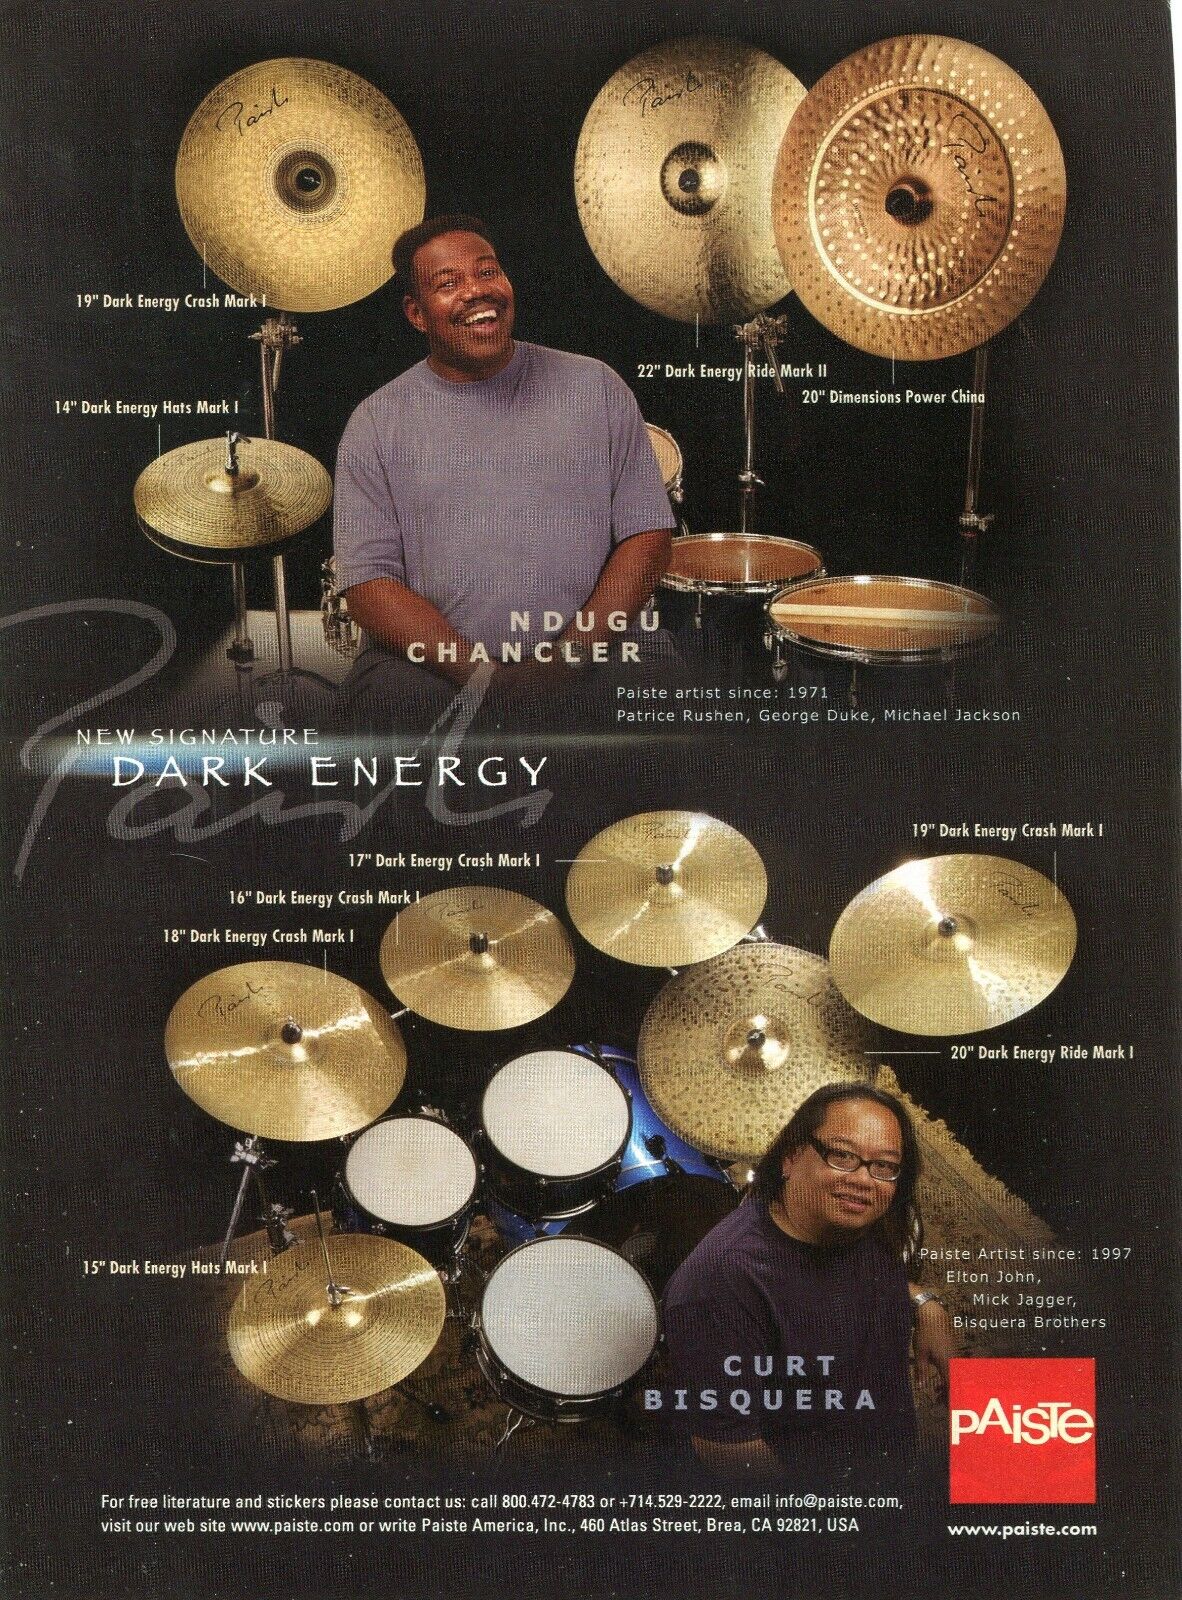 2005 Print Ad Paiste Dark Energy Drum Cymbal Setup Ndugu Chancler, Curt Bisquera